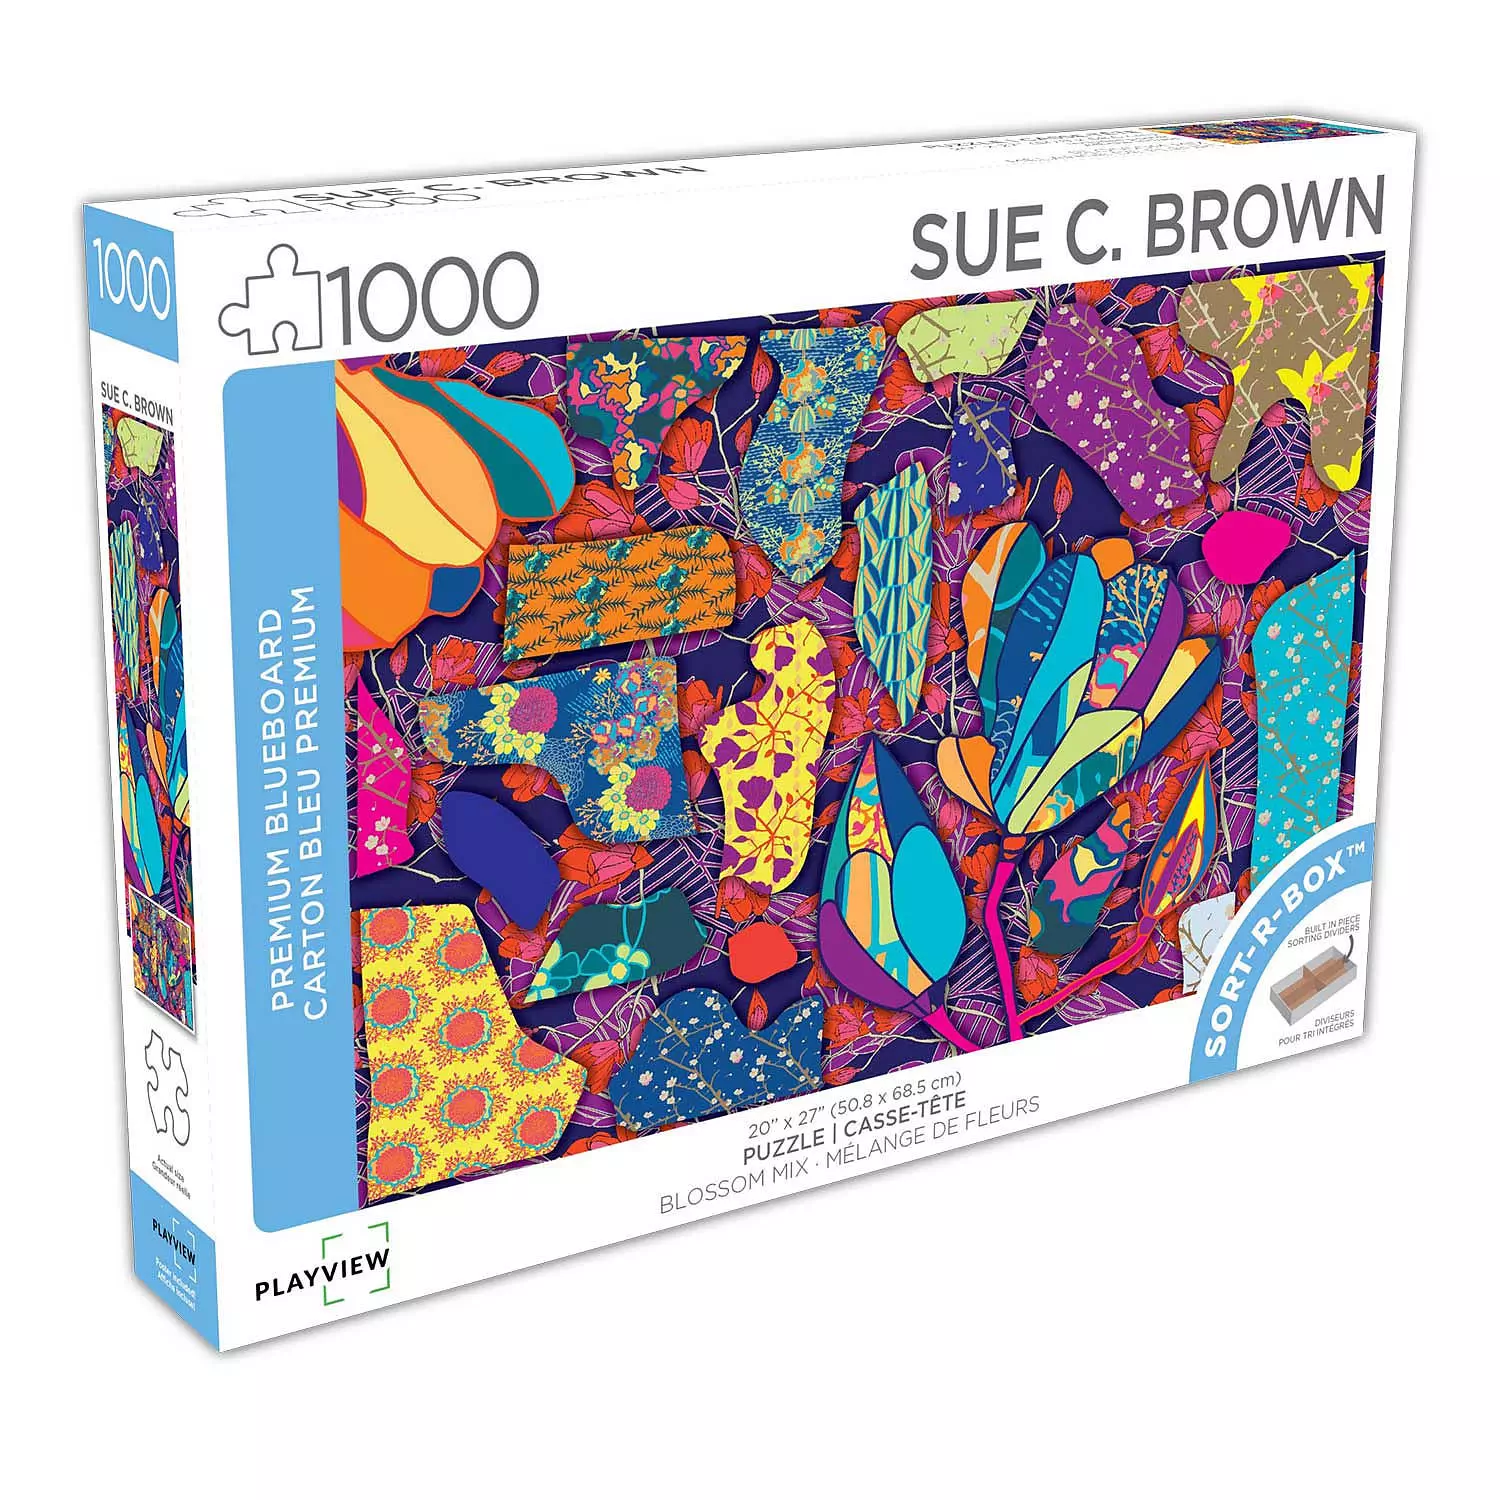 Playview - Puzzle, Sue C. Brown, Blossom mix, 1000 pcs